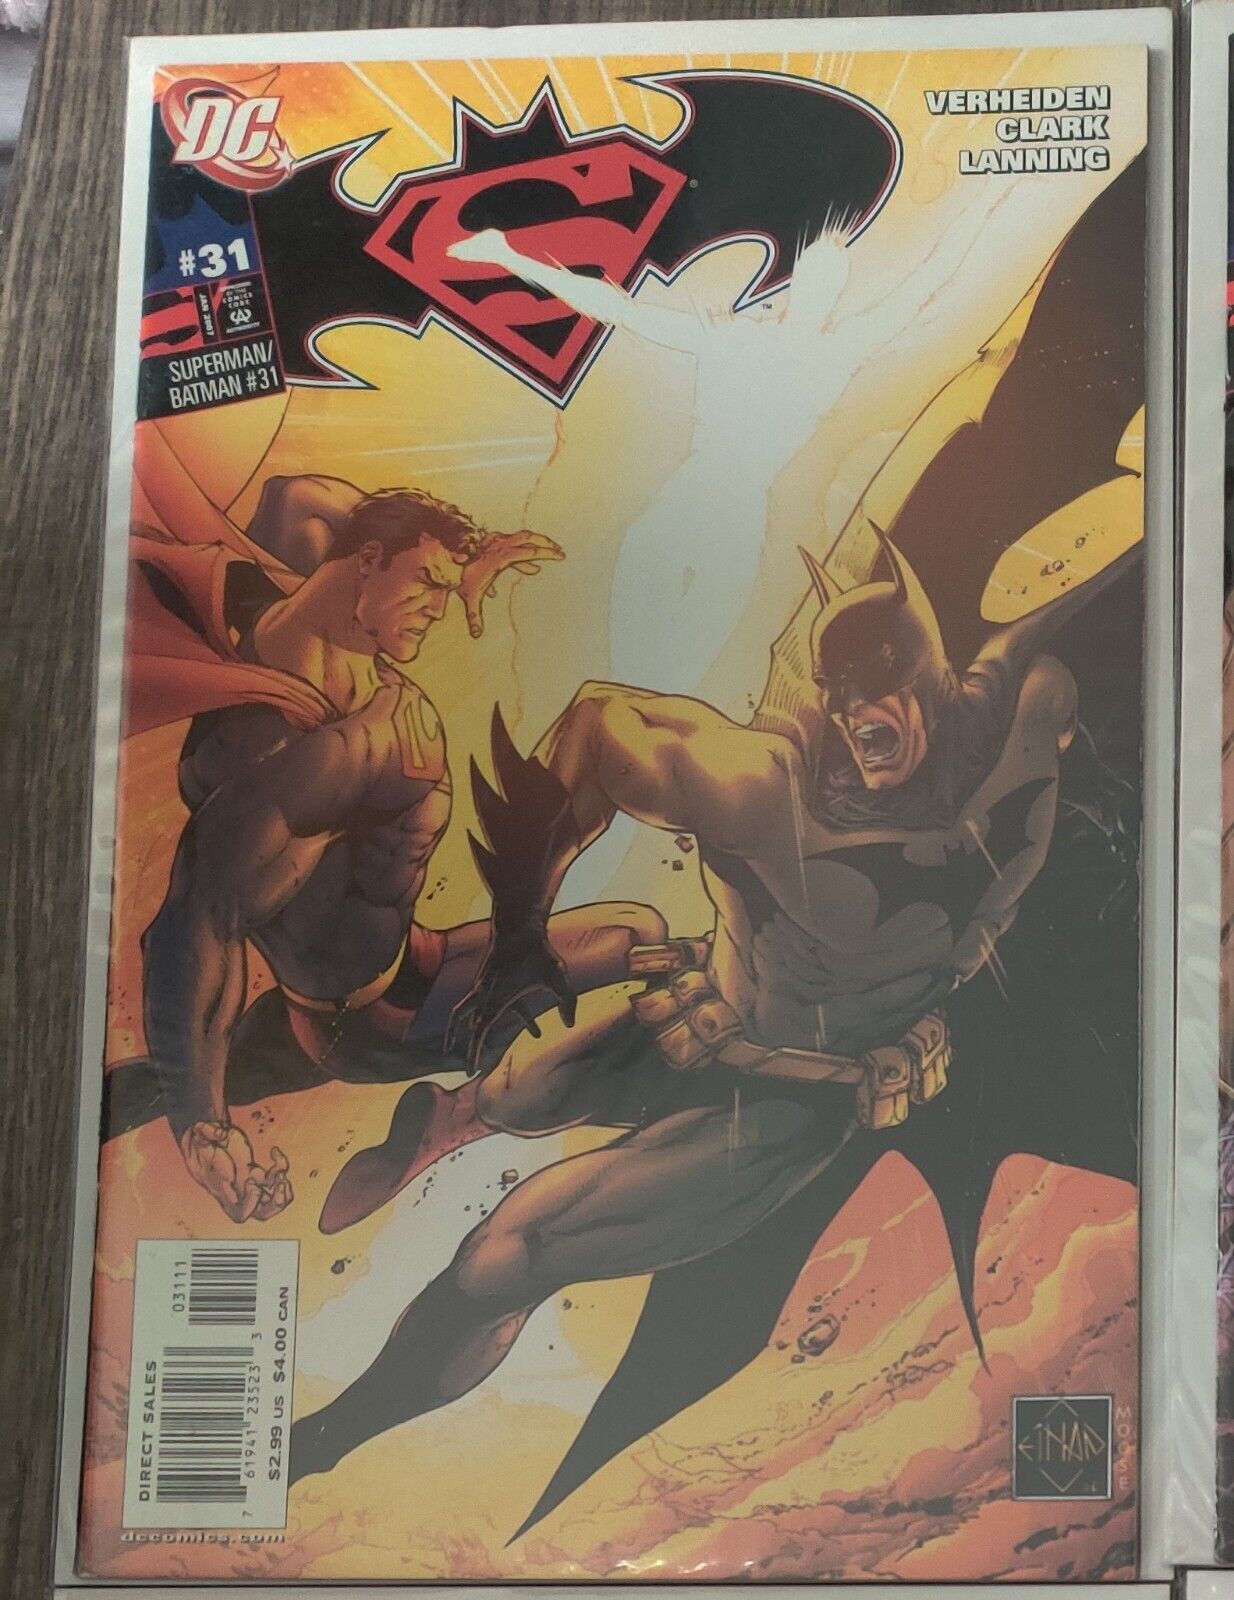 SupermanBatman #31 (2007)